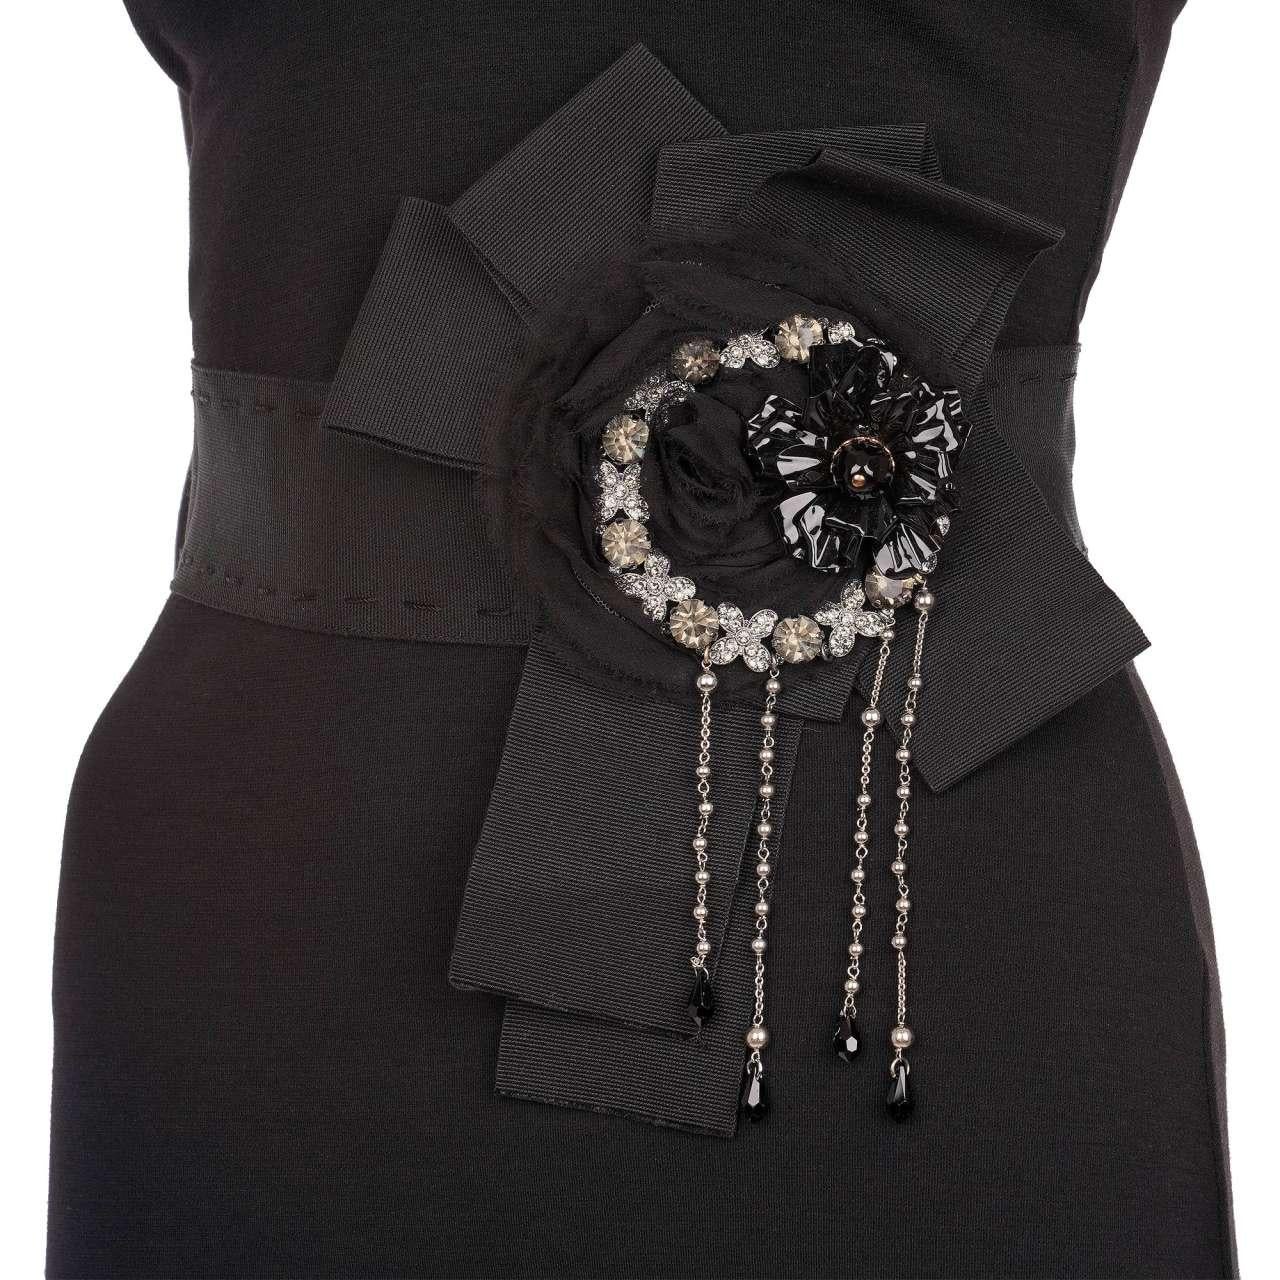 Dolce & Gabbana - Crystal Flower Bow Chain Belt Black 40 S In Excellent Condition For Sale In Erkrath, DE